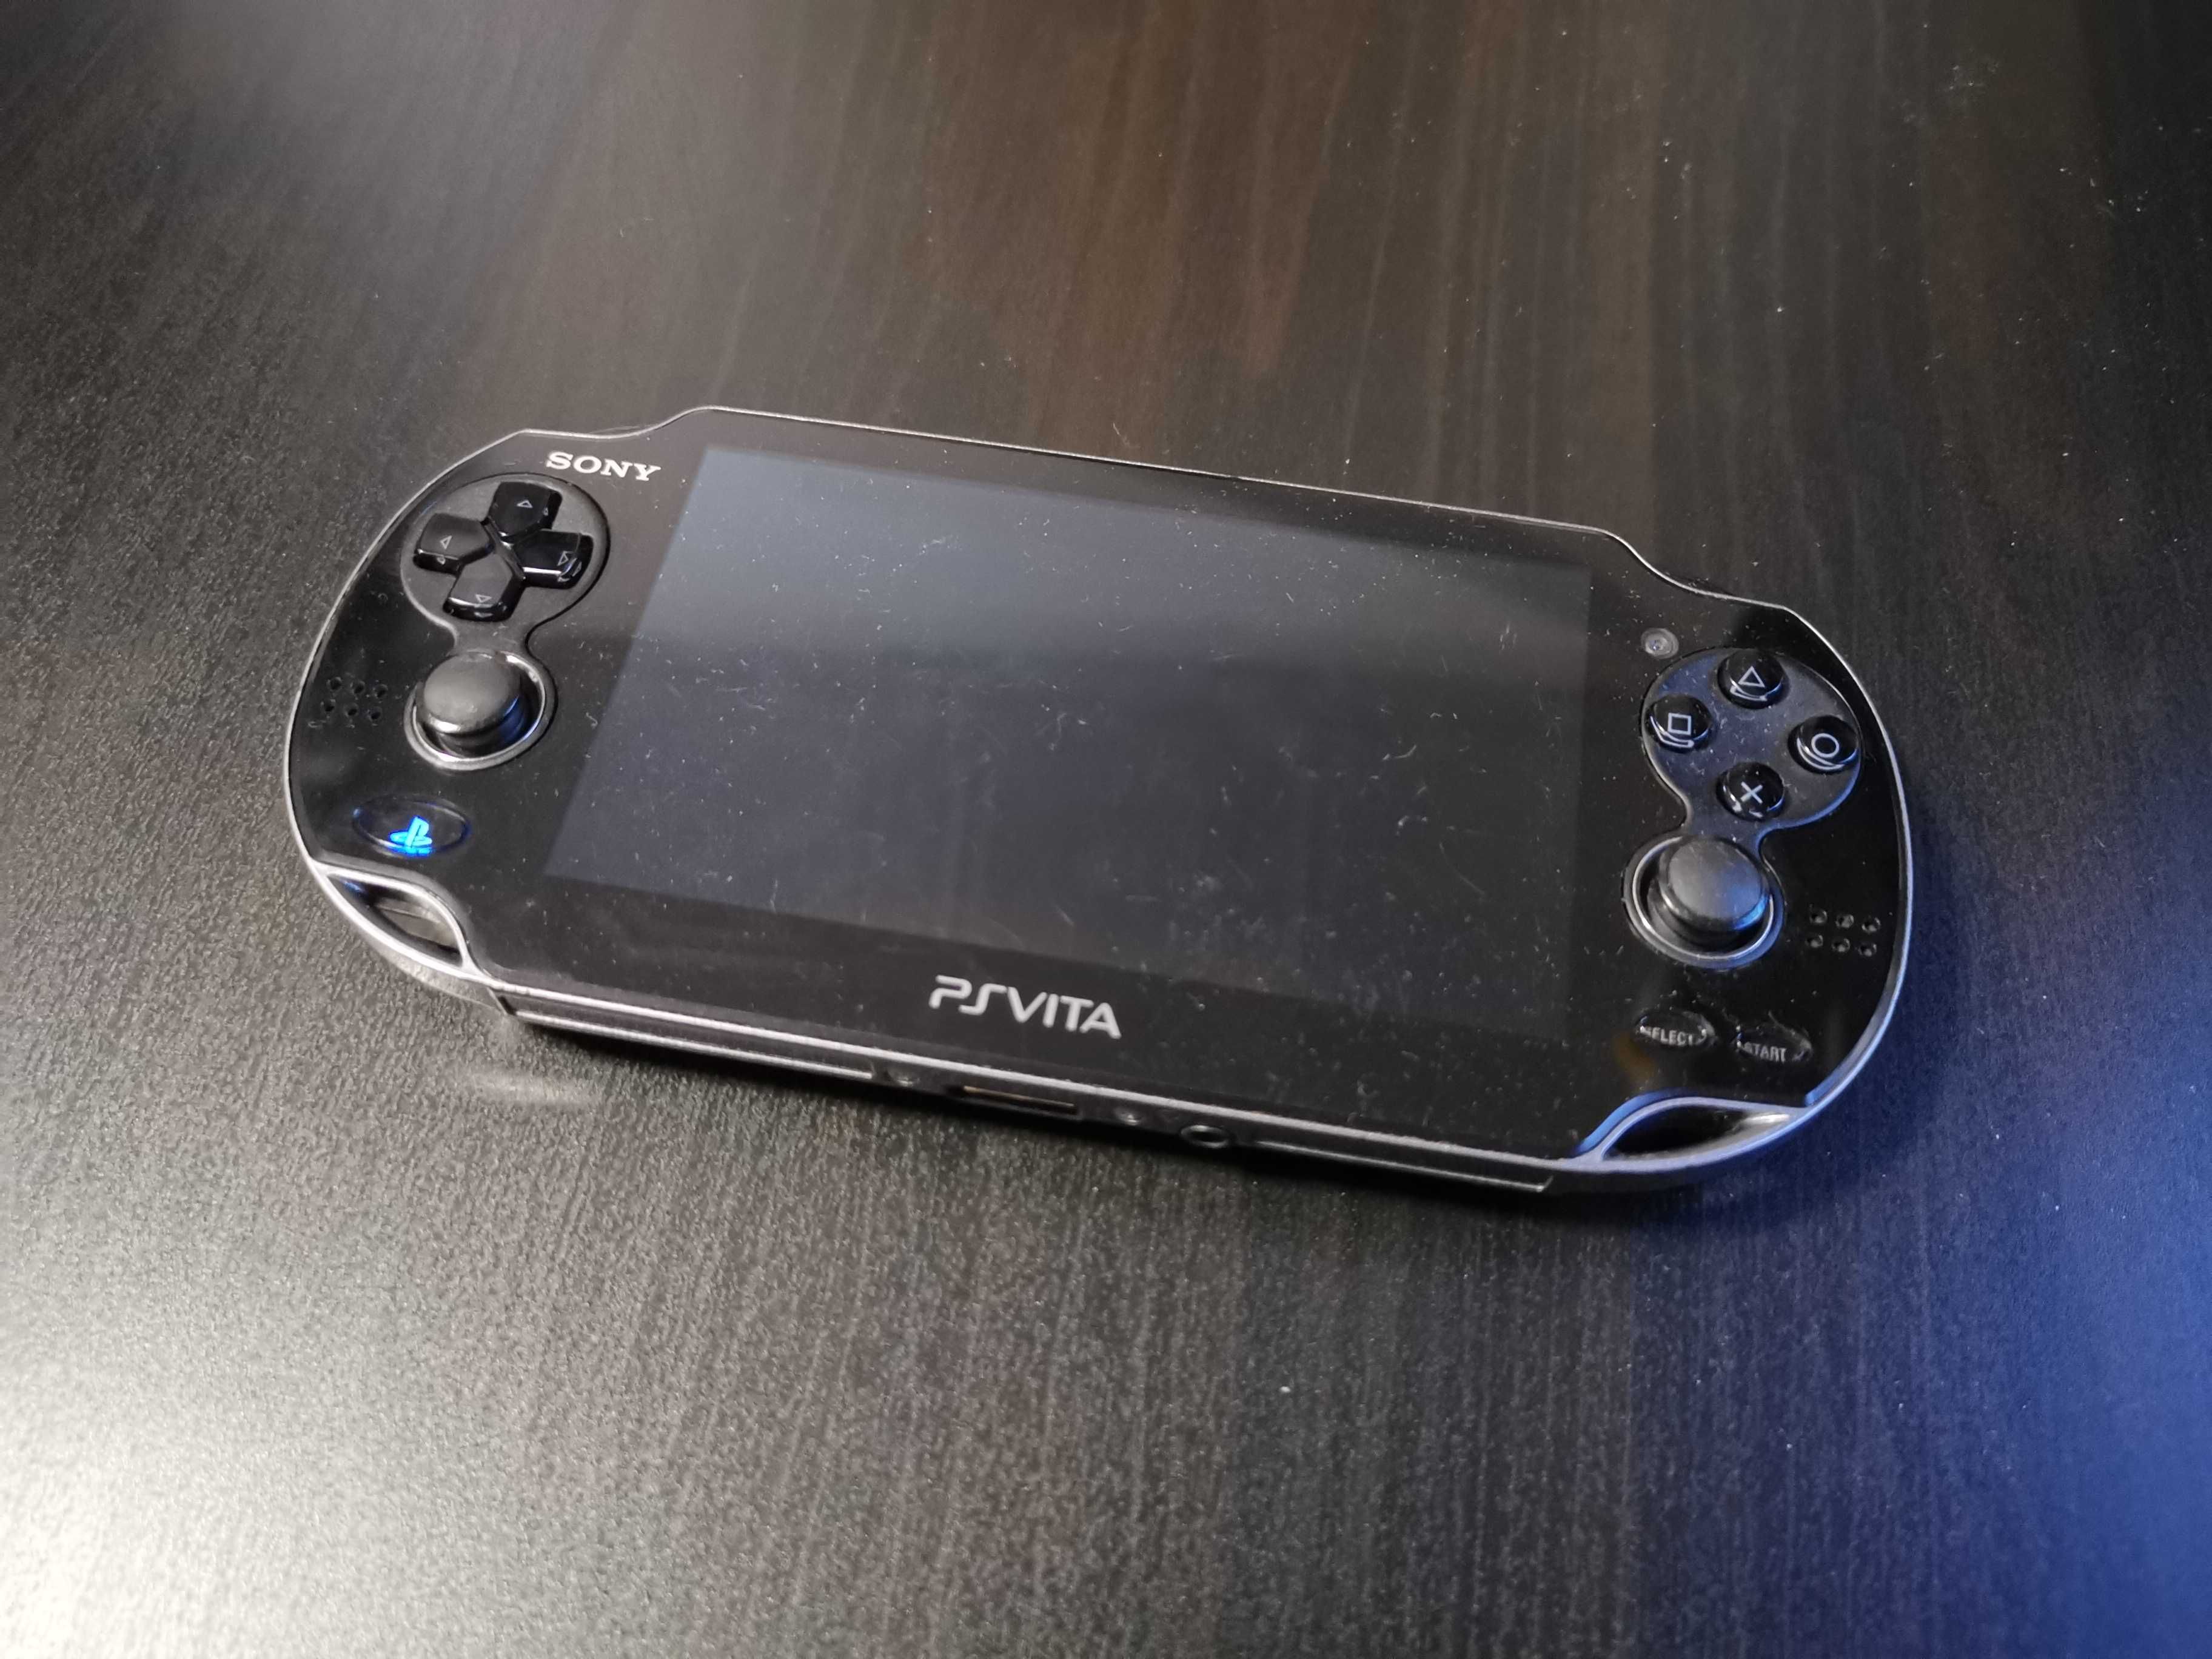 Consola PS Vita PlayStation Vita OLED 3G SIM SD2Vita 32GB PCH-1004